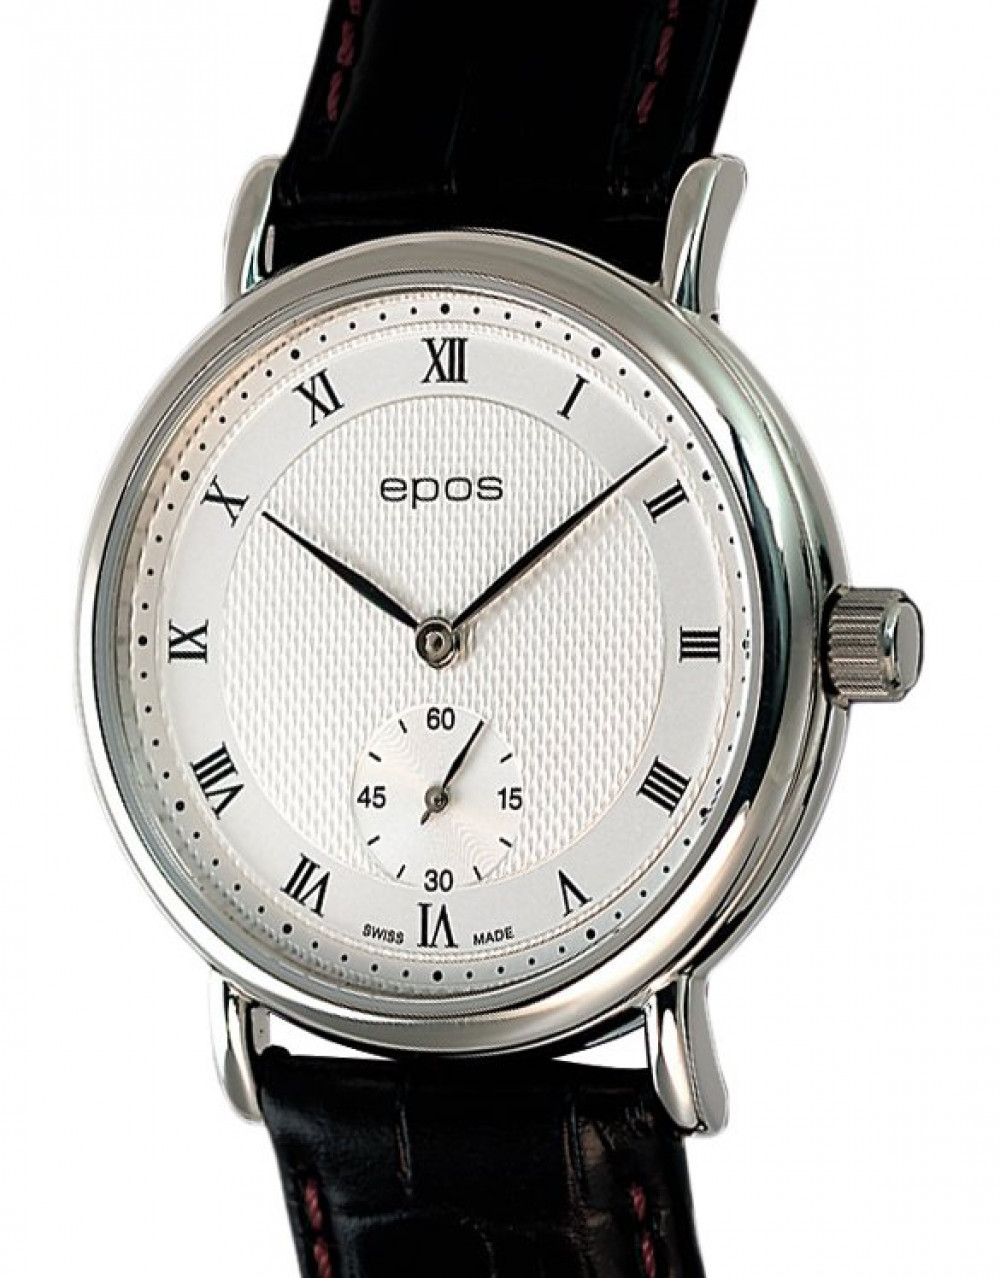 Zegarek firmy Epos, model Action Team/Collection Classic